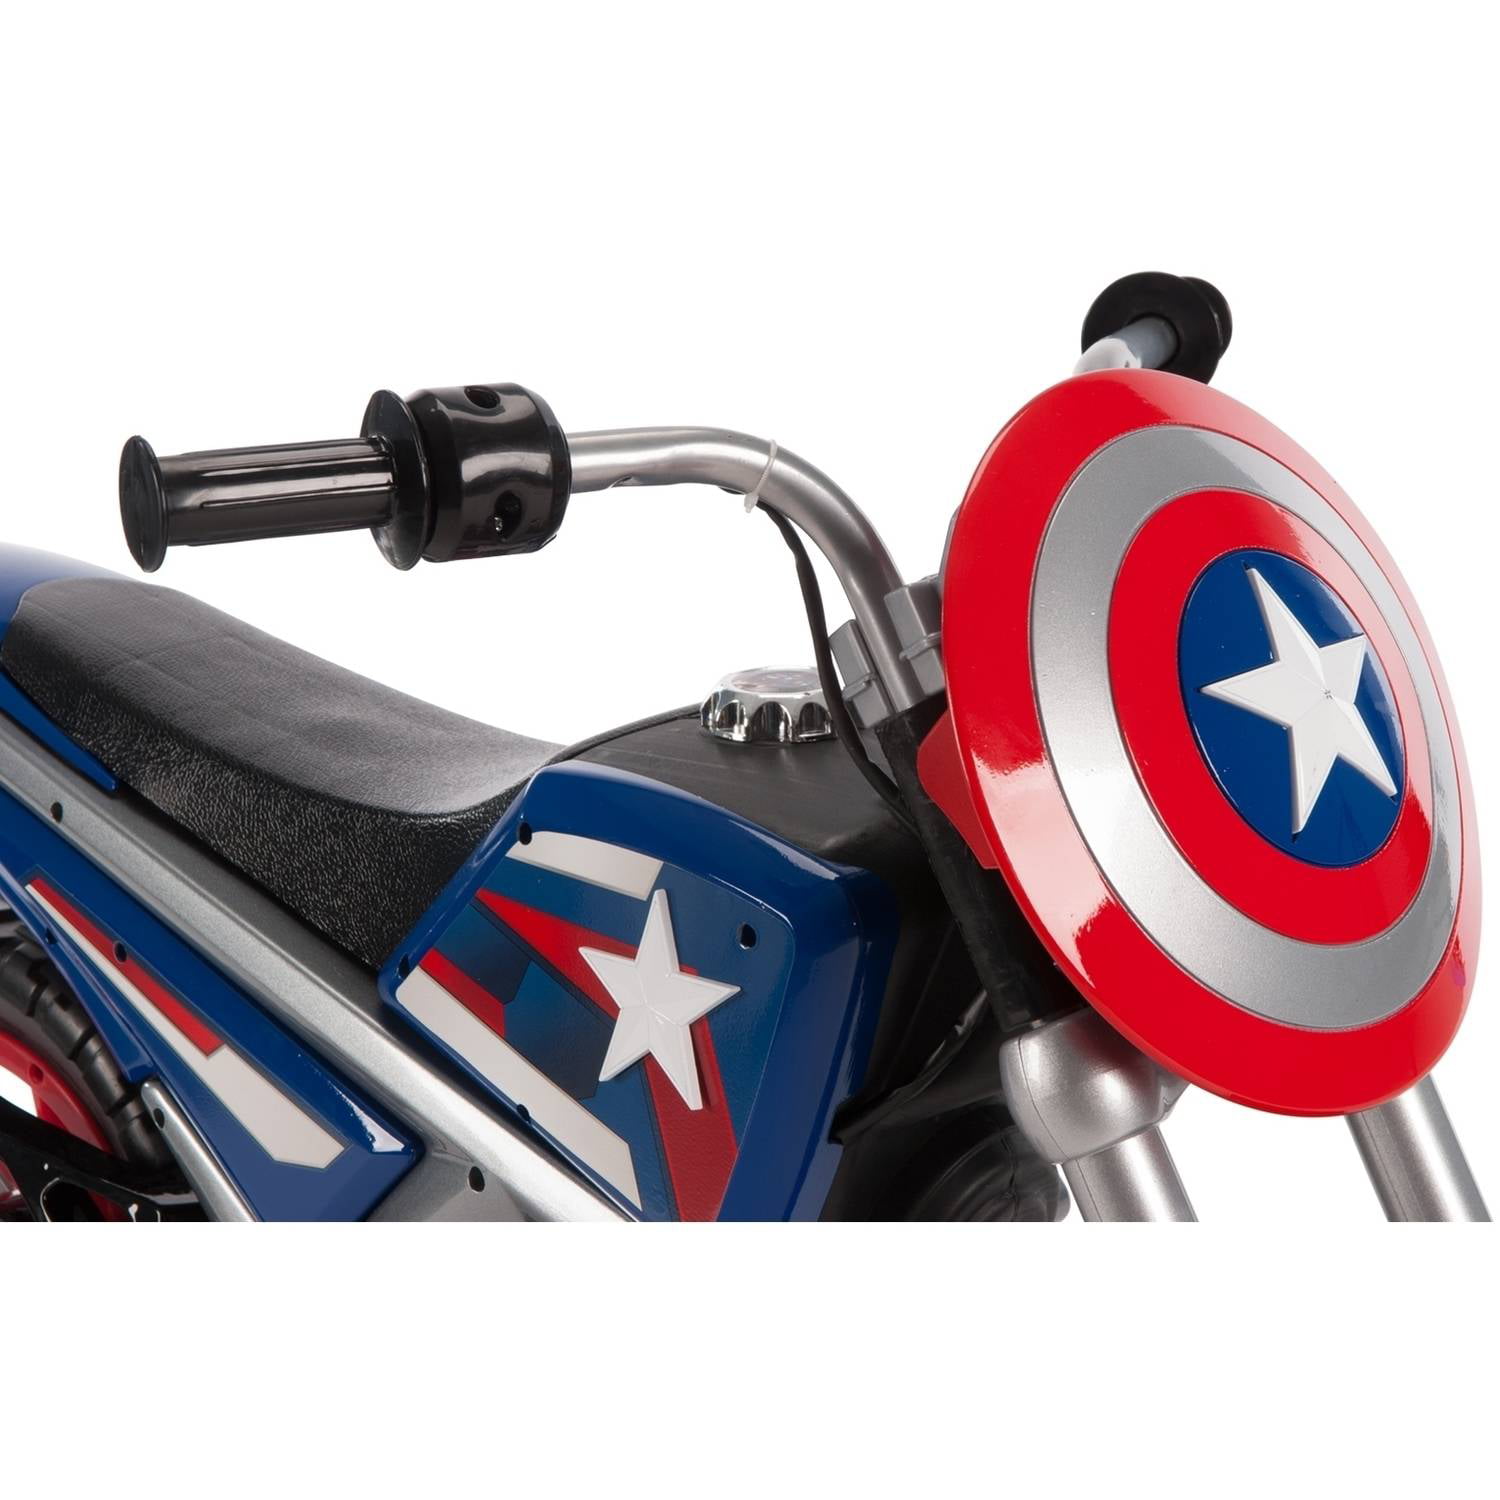 captain america bike 14 inch